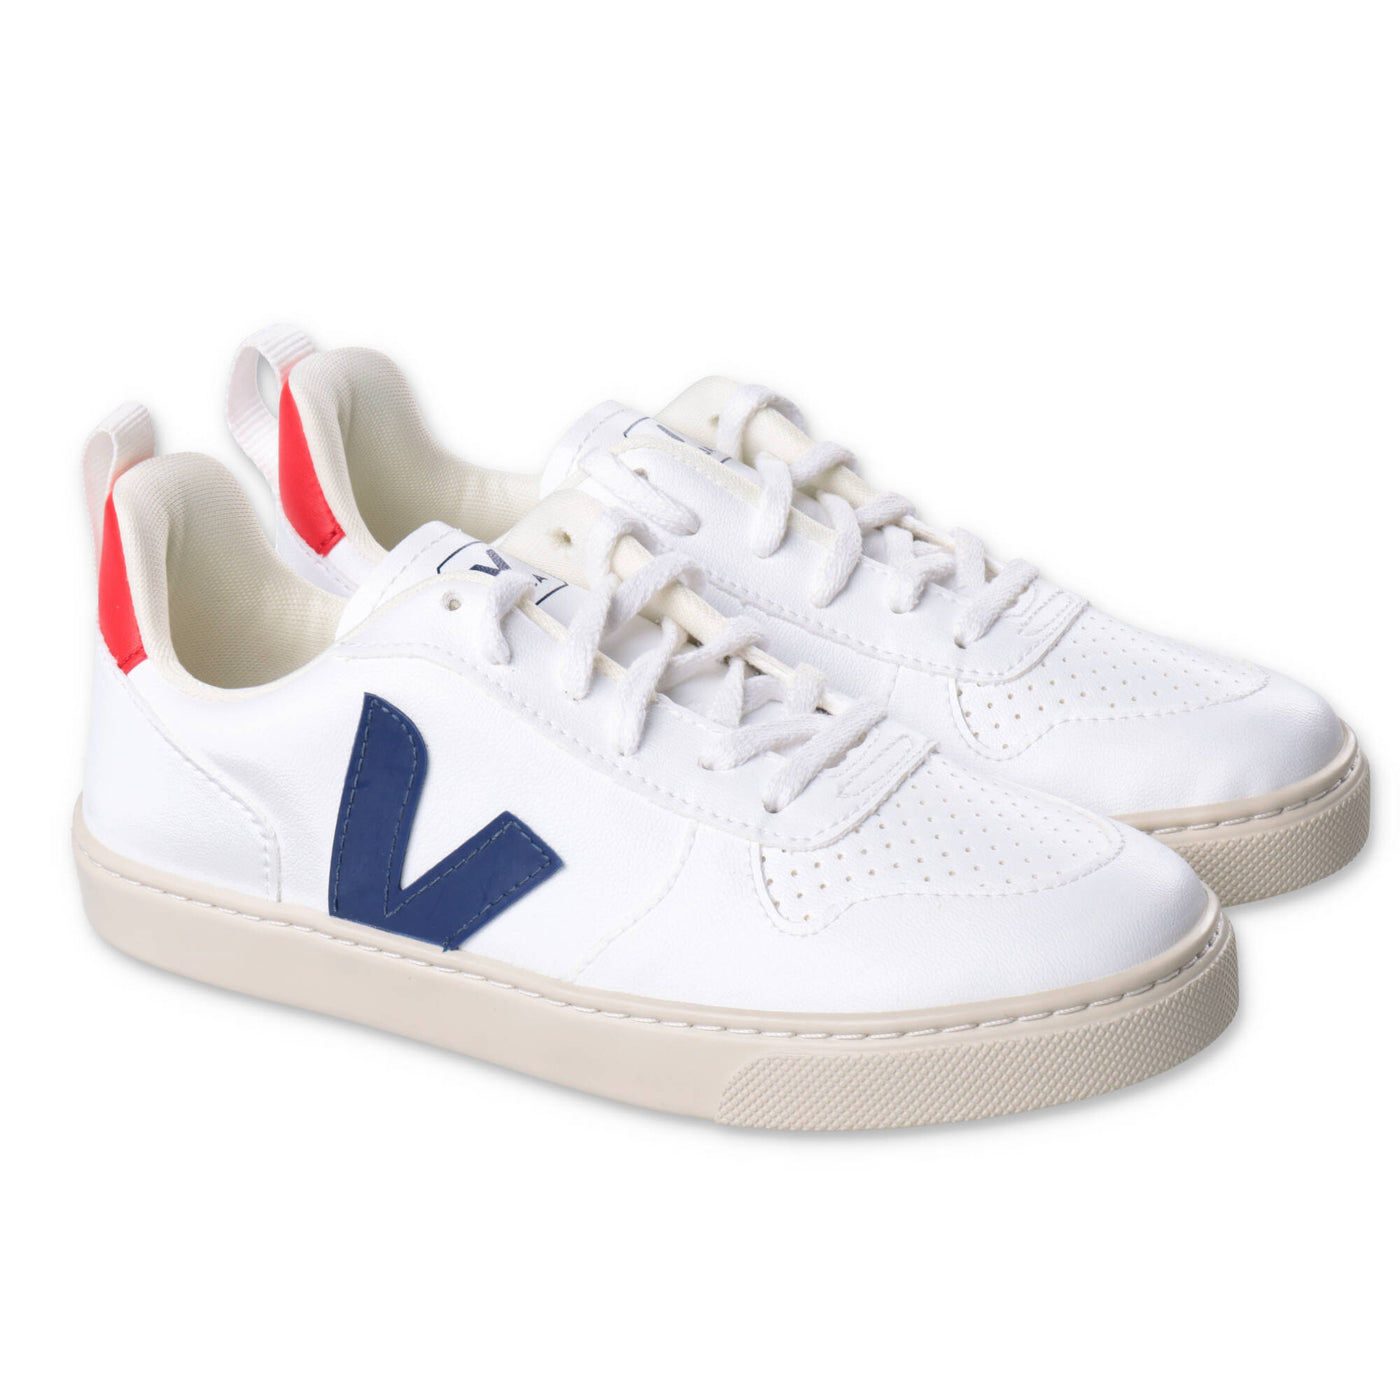 White faux leather boy VEJA laced sneakers | Carofiglio Junior